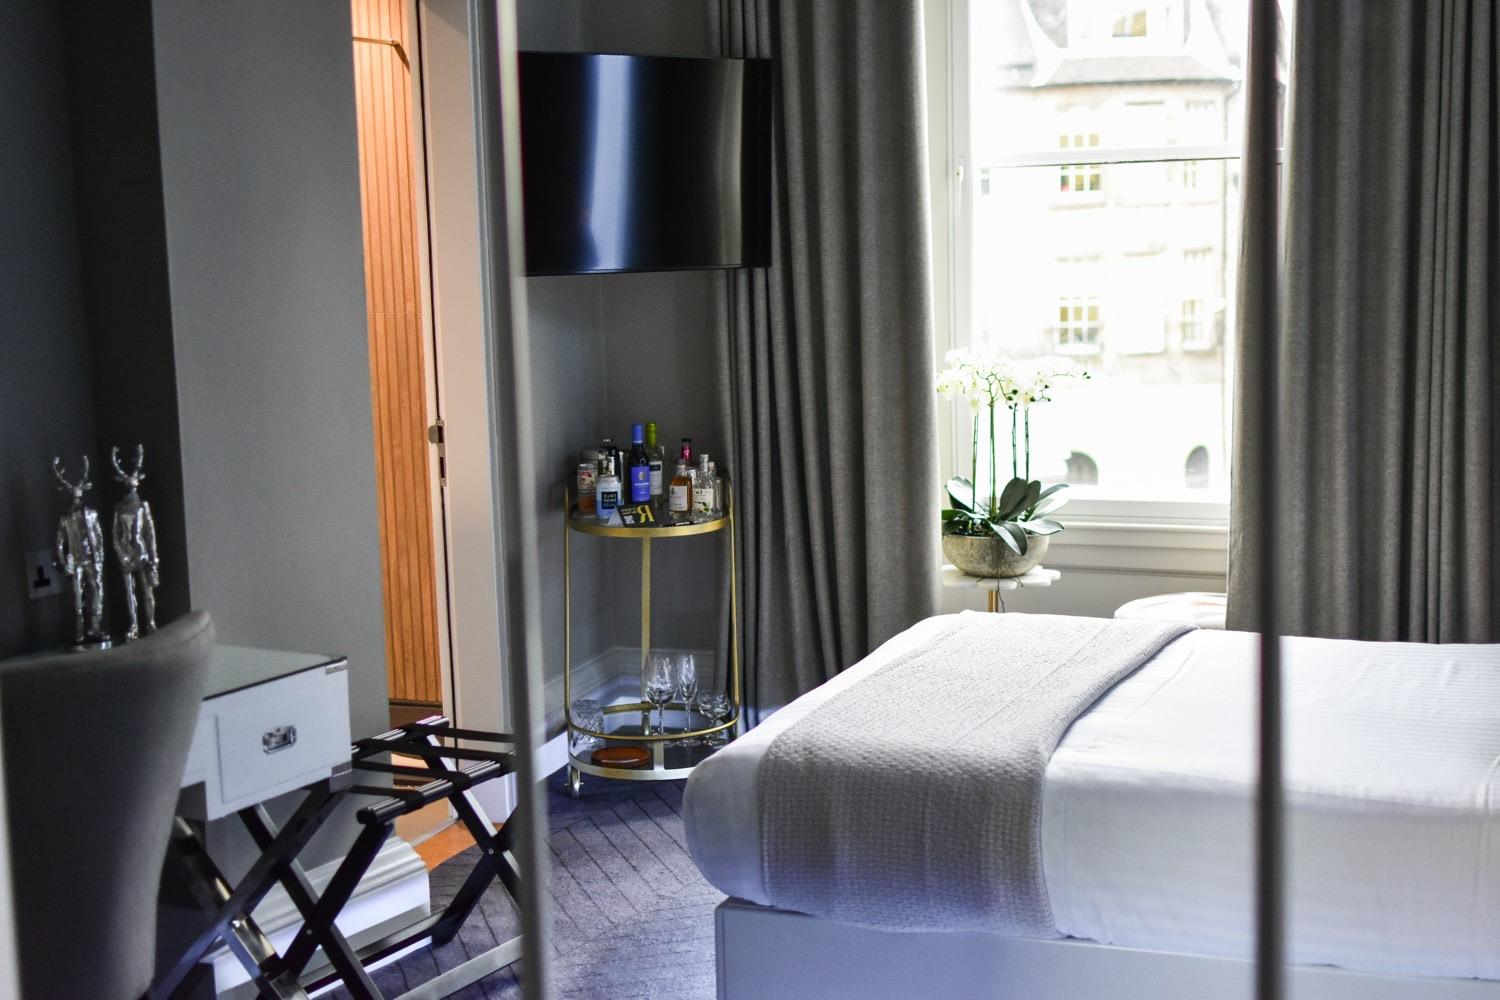 Standard Room in Edinburgh luxury boutique hotel near castle